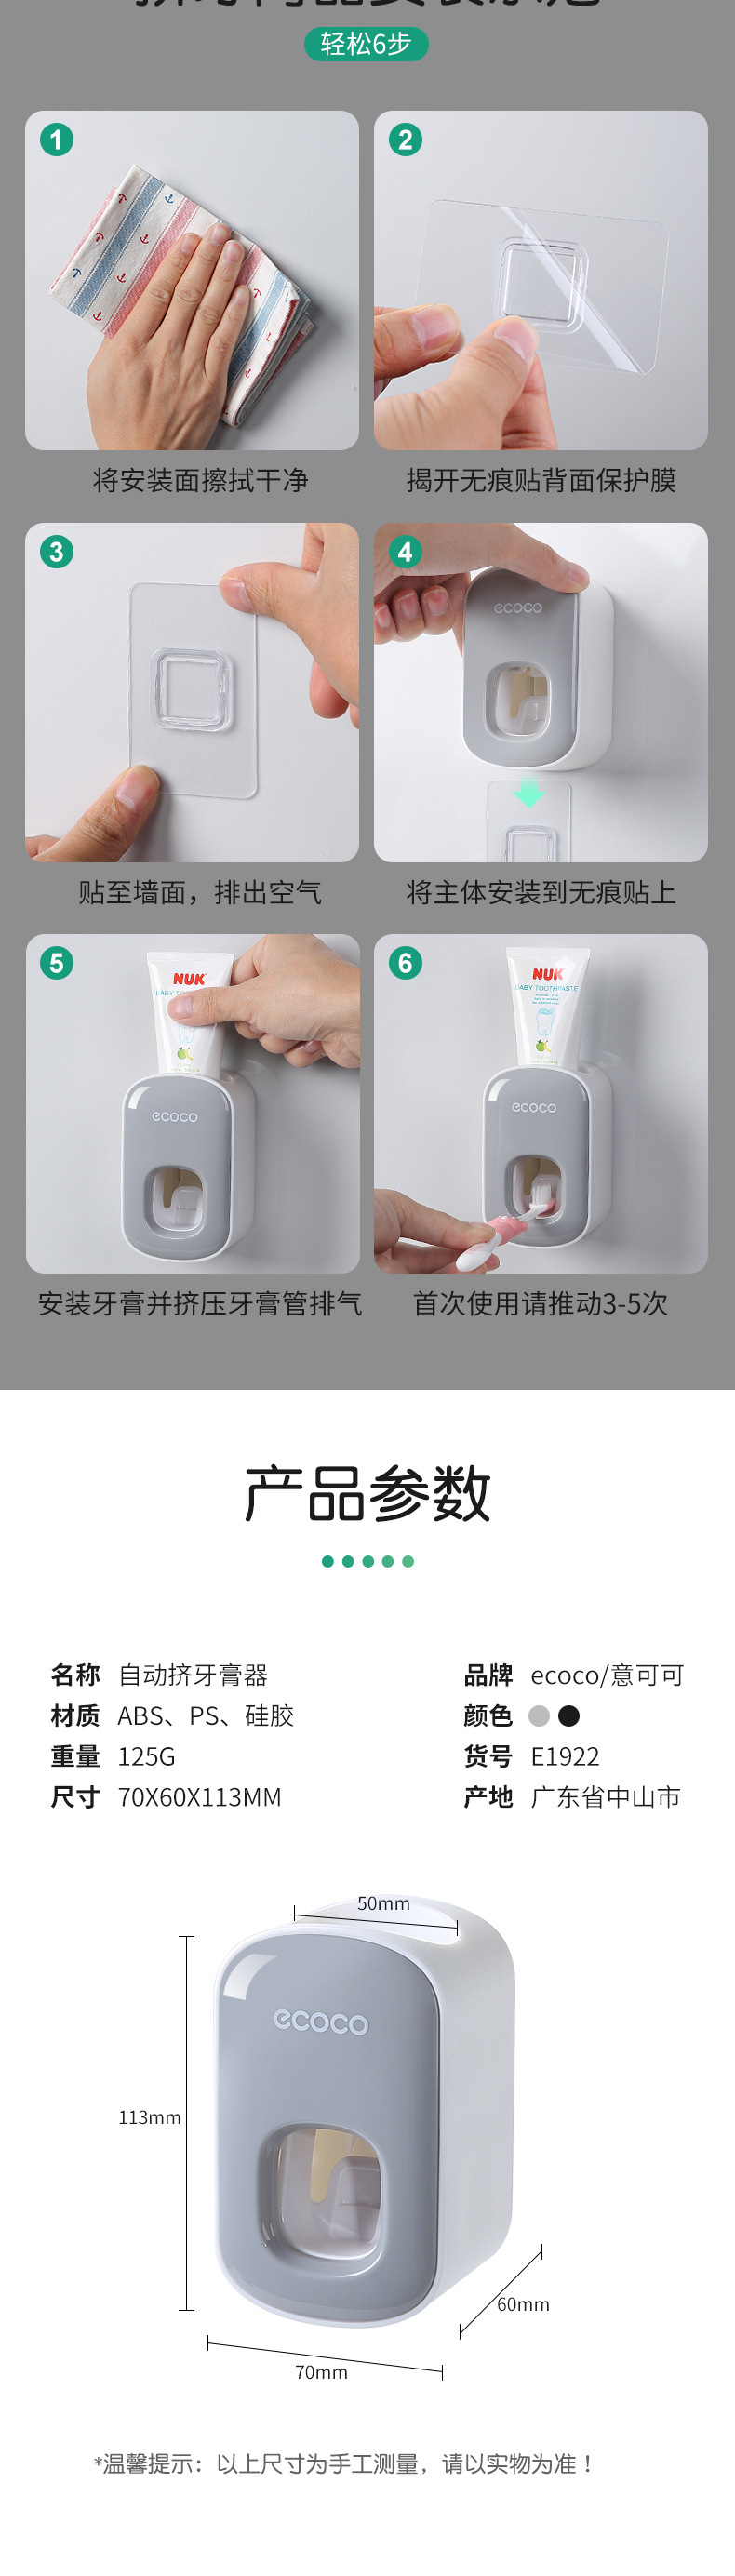 ecoco全自动挤牙膏吸壁挂式挤压器套装家用免打孔牙刷置物架